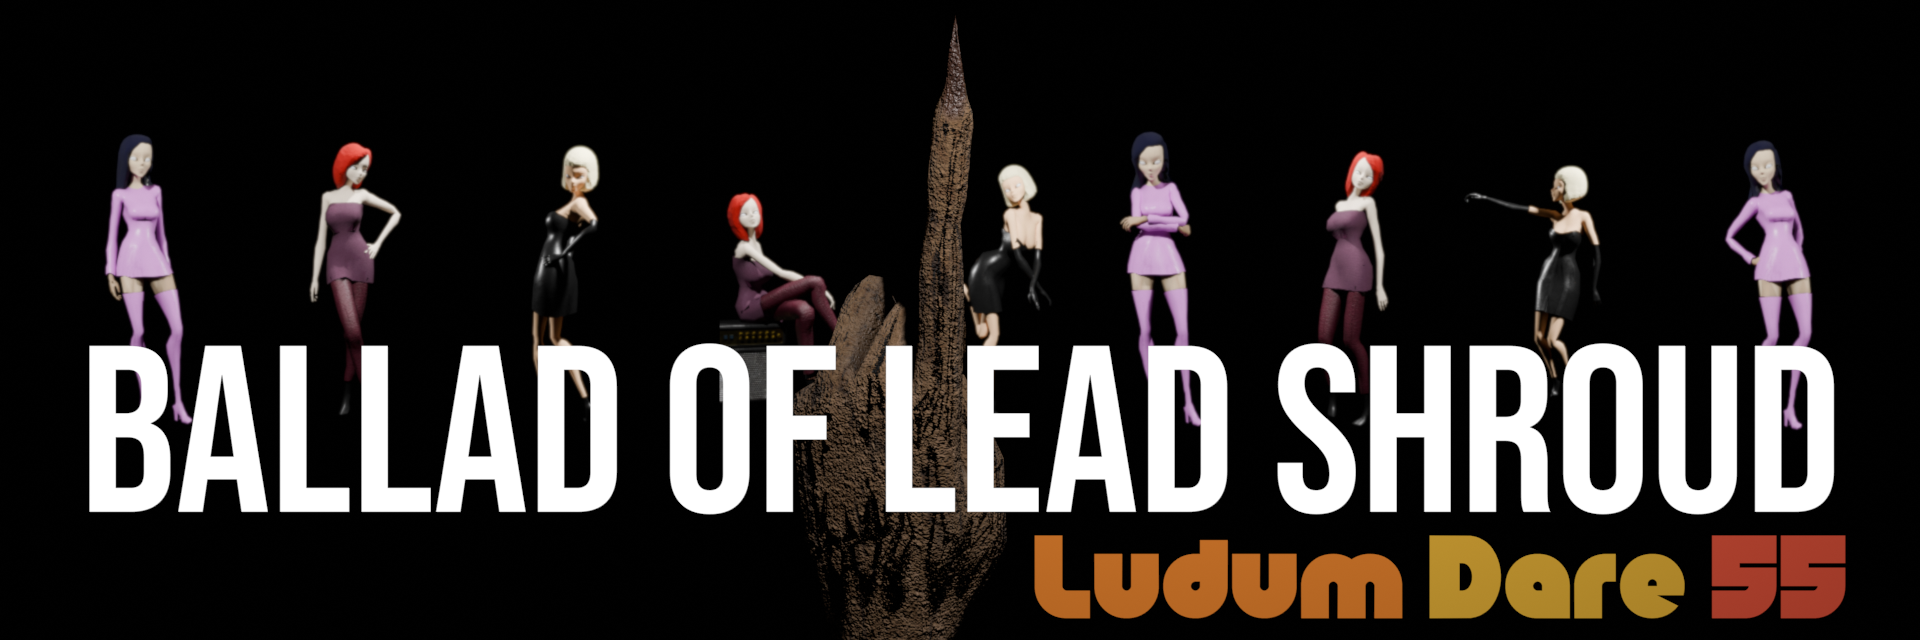 Ballad of Lead Shroud